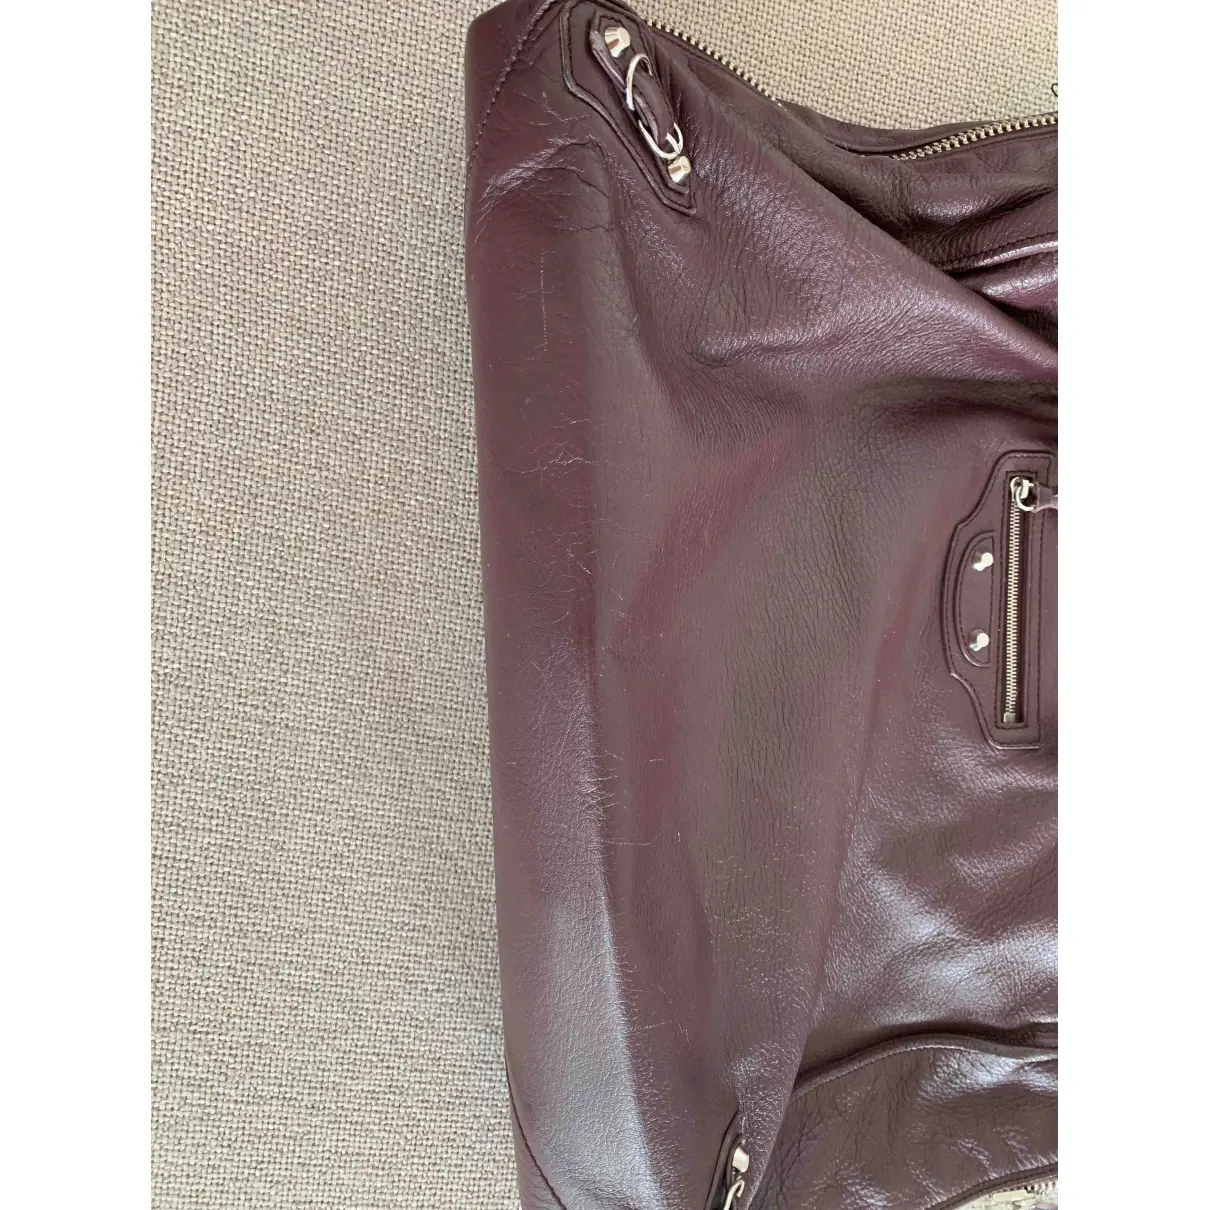 Buy Balenciaga Papier leather tote online